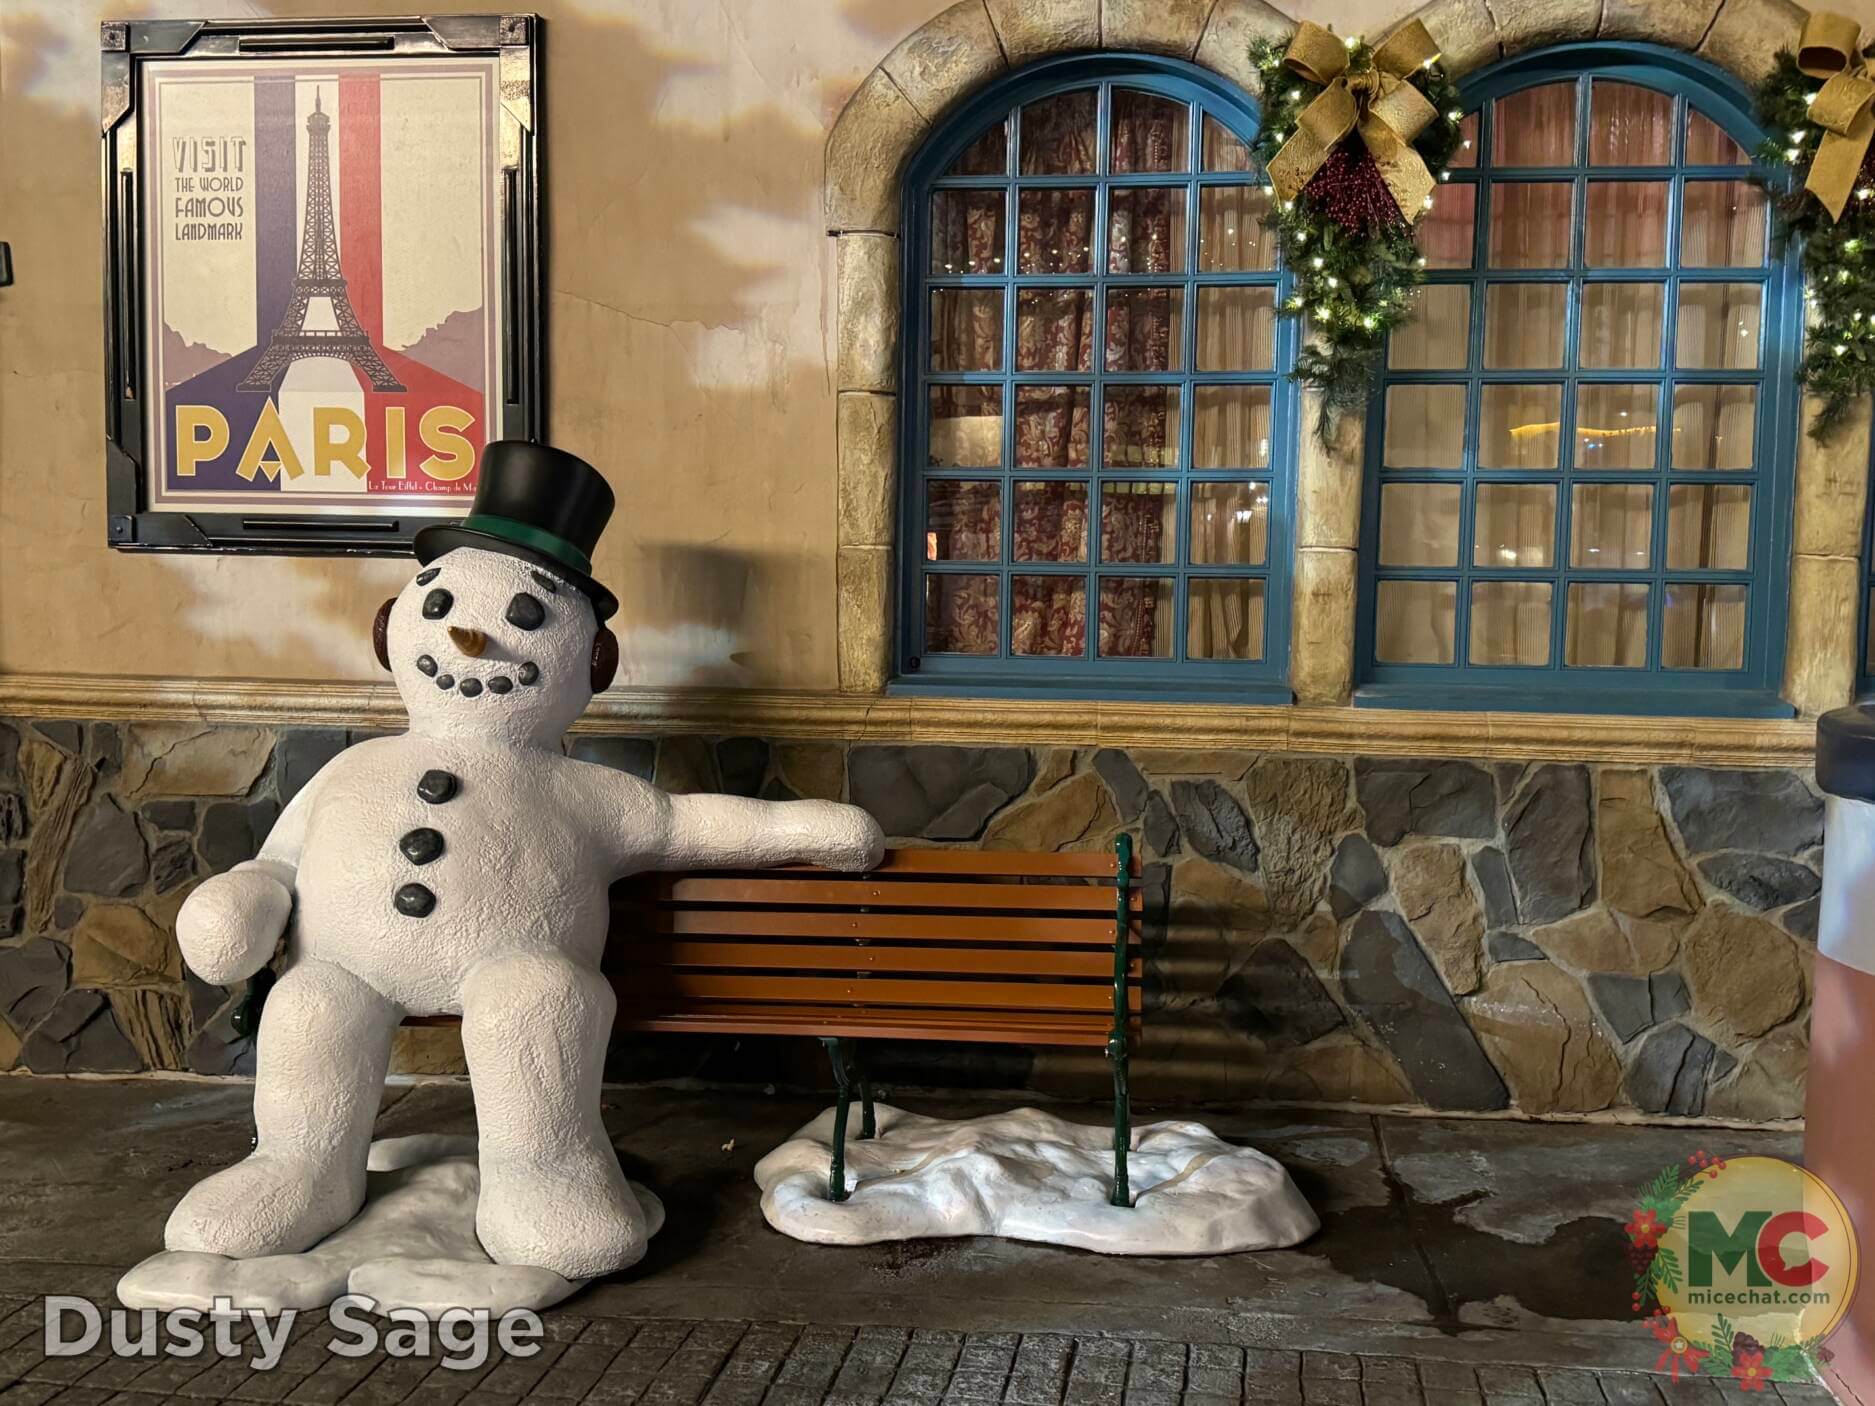 Grinchmas, A Magical &#038; Grinchy Christmas at Universal Studios Hollywood!